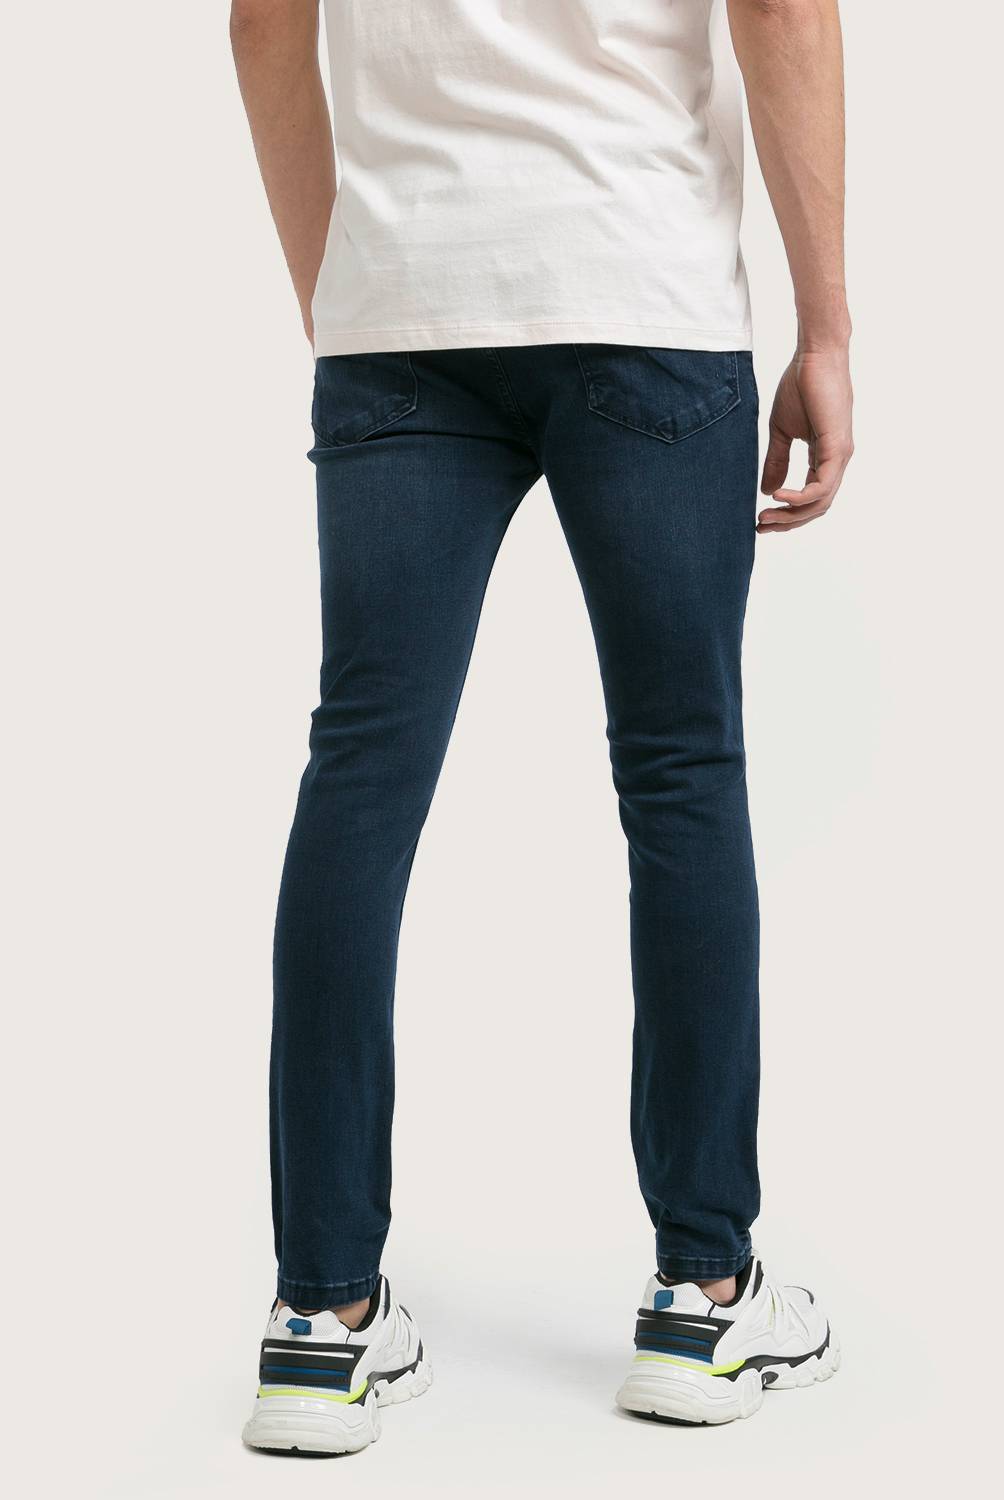 AMERICANINO - Jeans Super Skinny Hombre